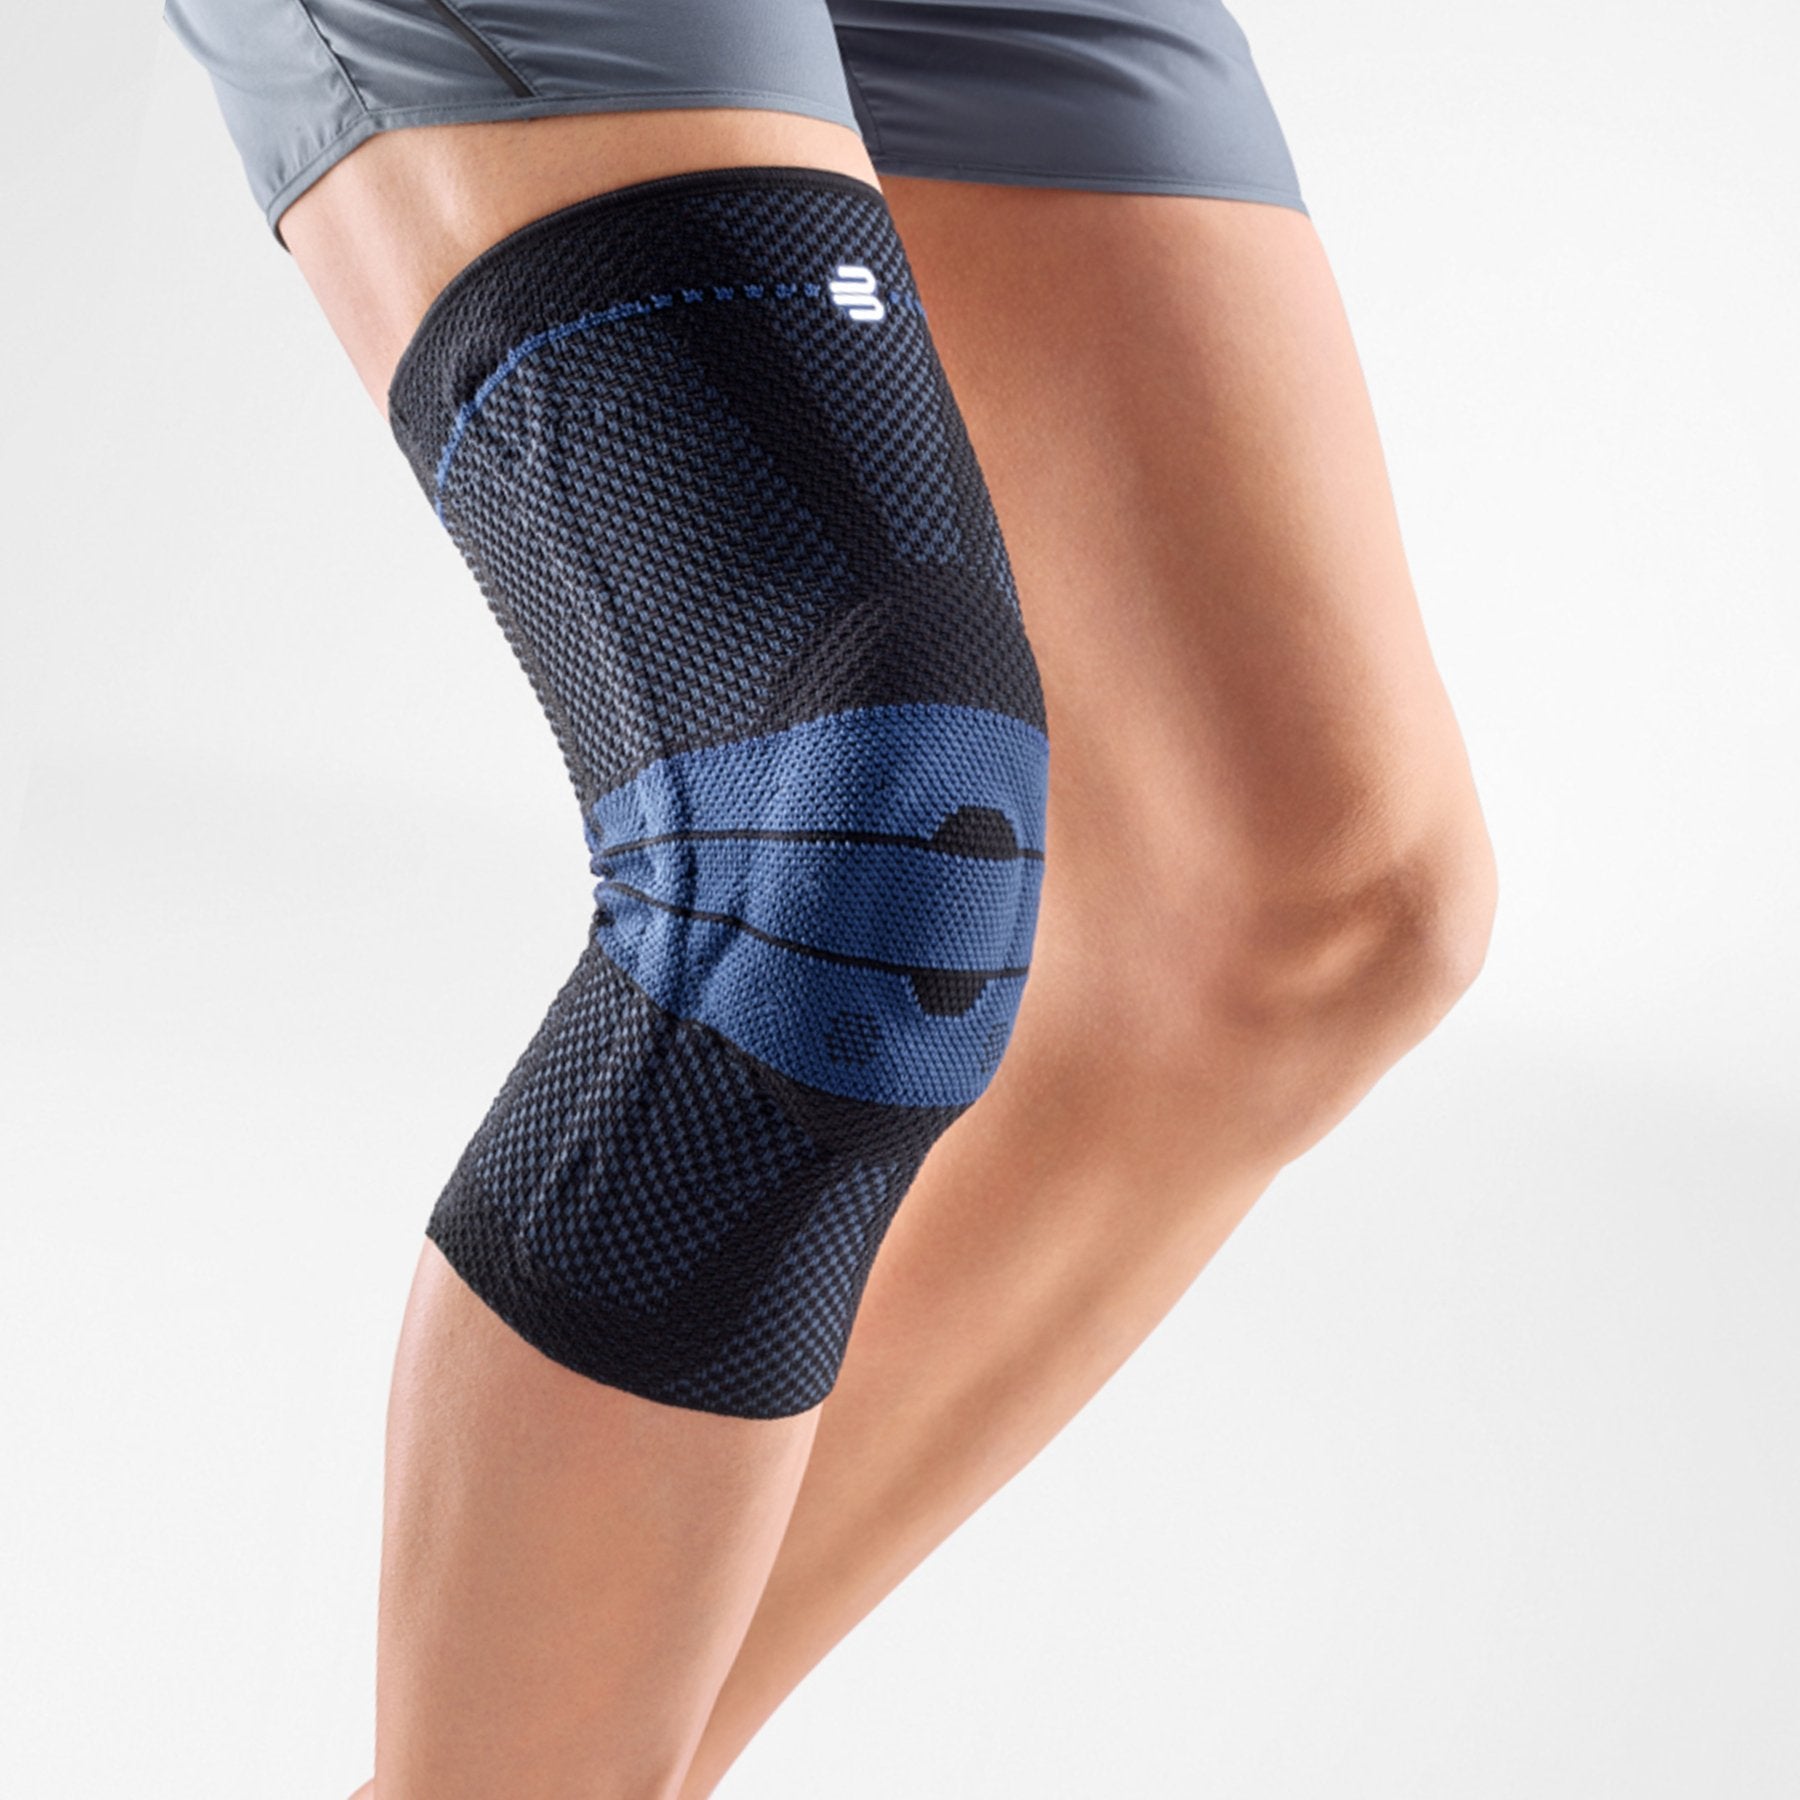 Bauerfeind GenuTrain® Comfort Knee Support - Medical Grade Compression